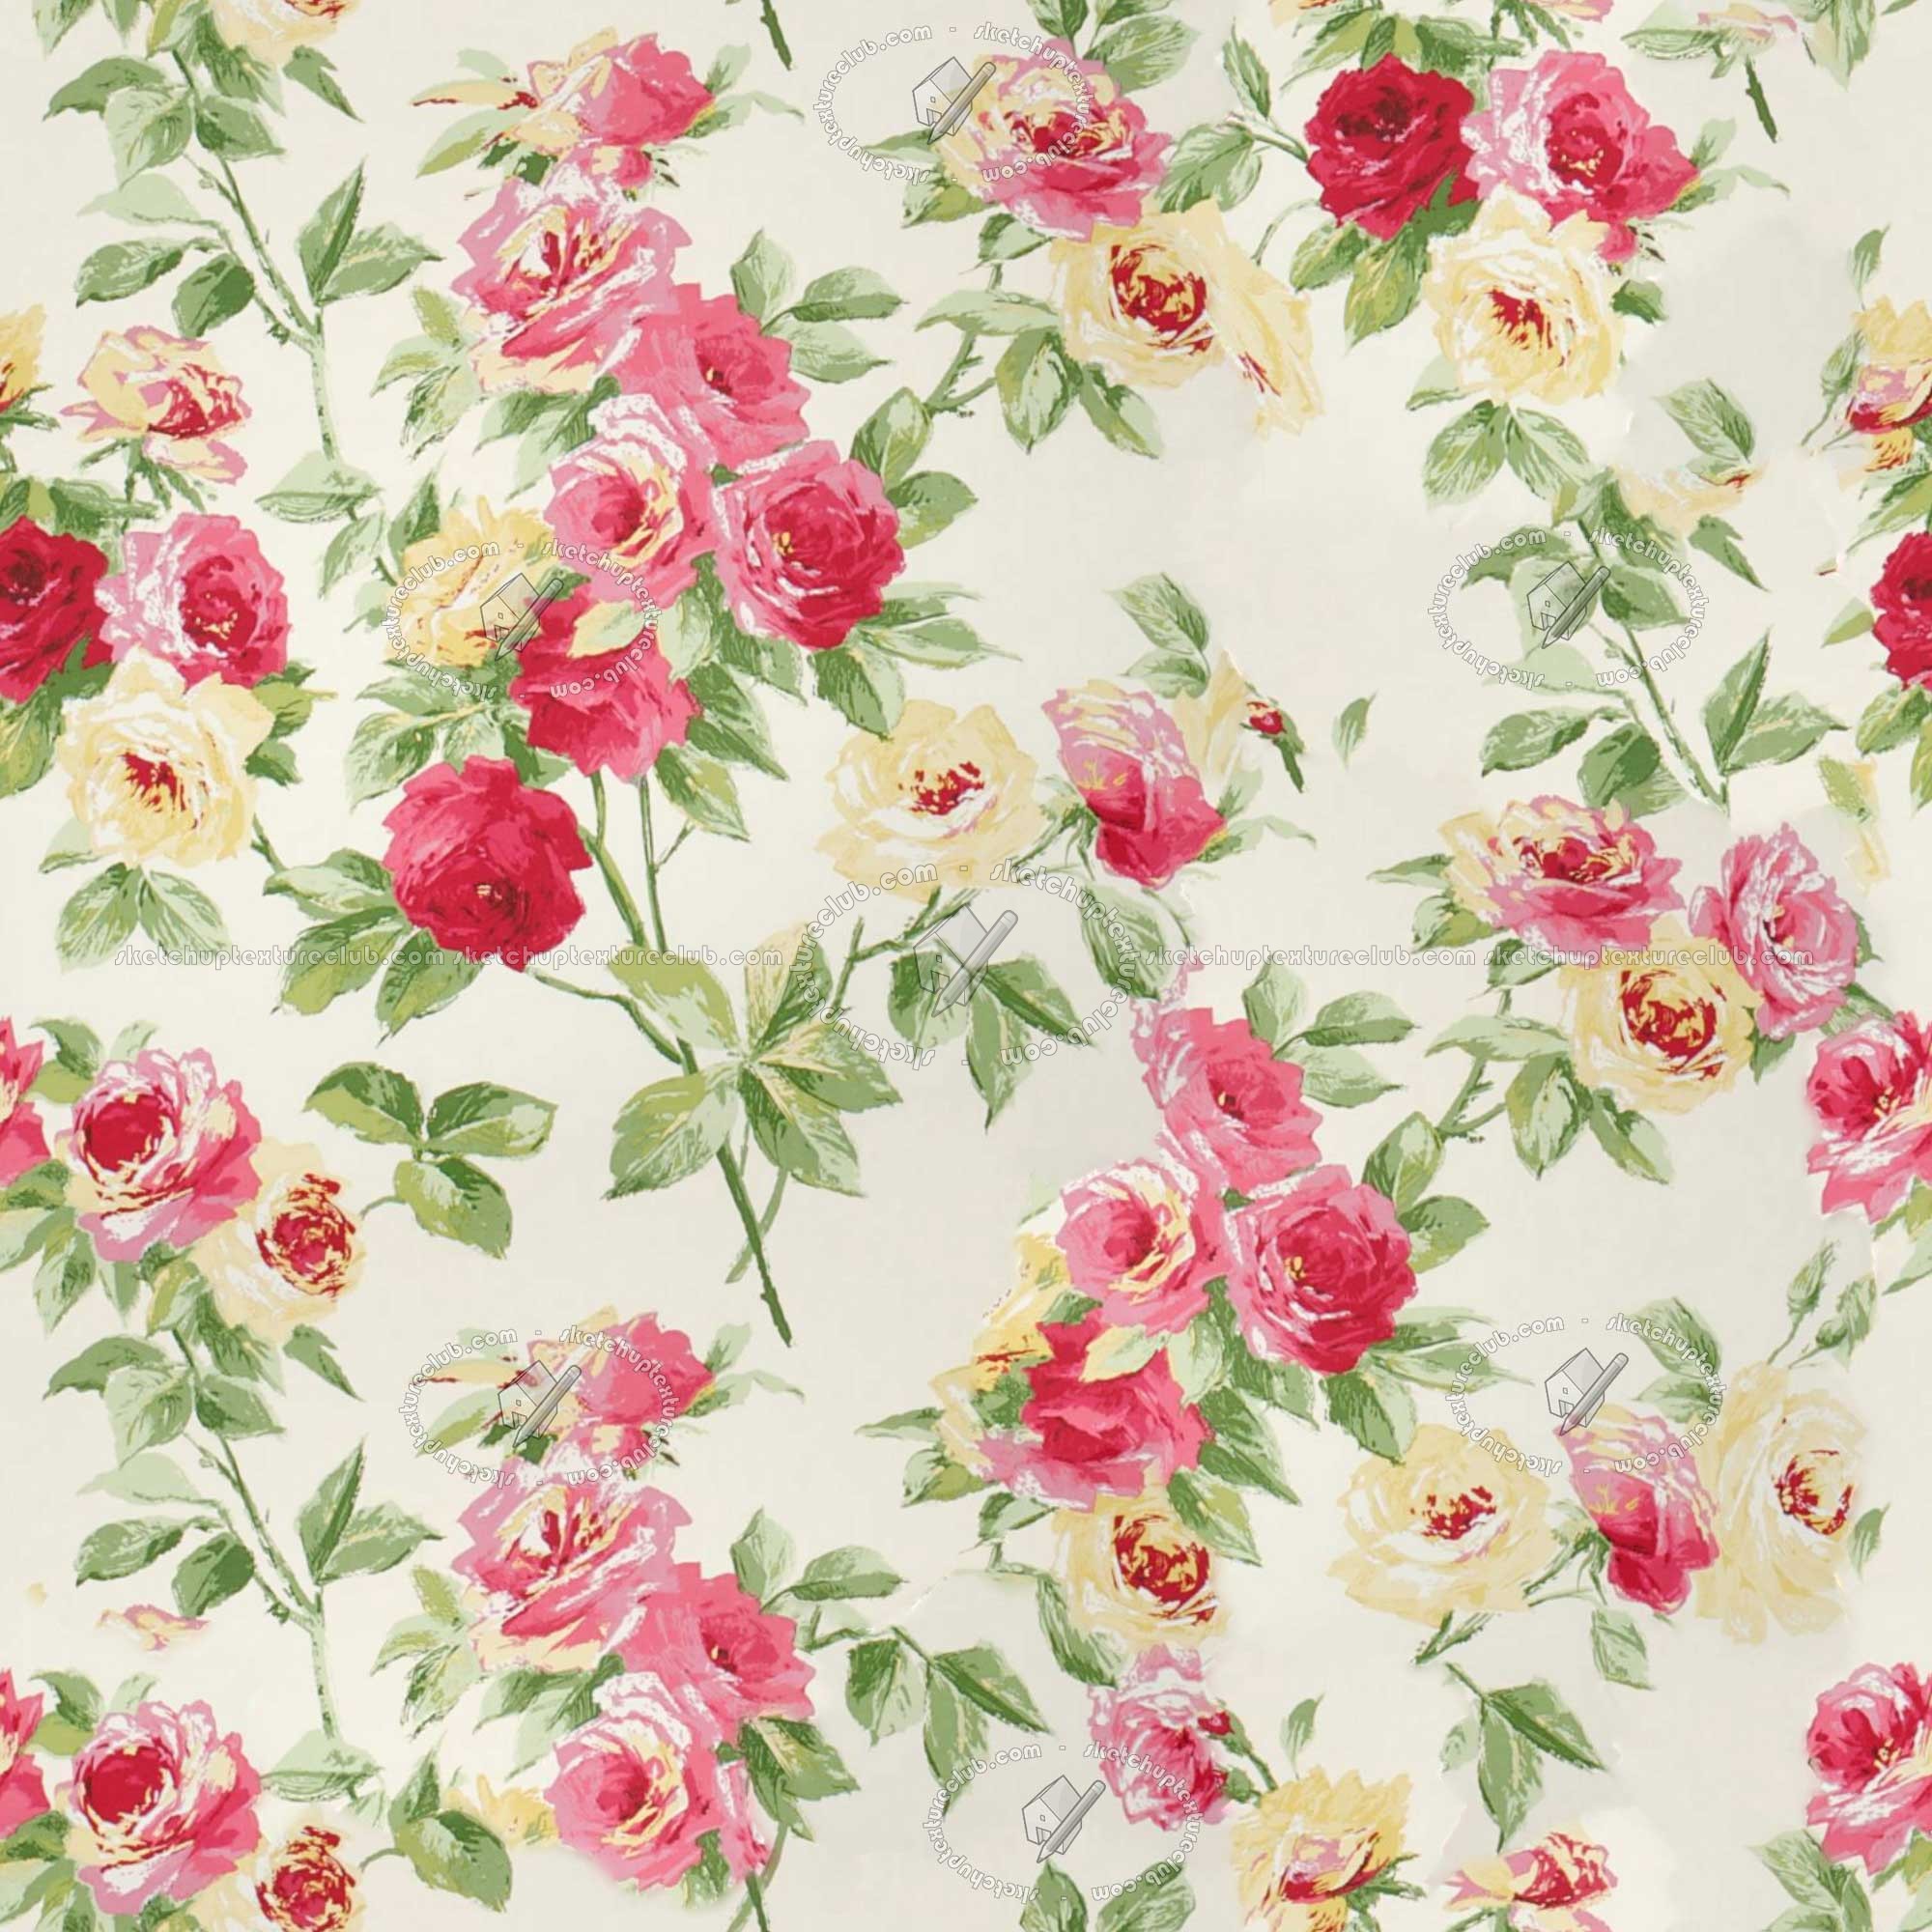 PixLith - Floral Wallpaper Texture